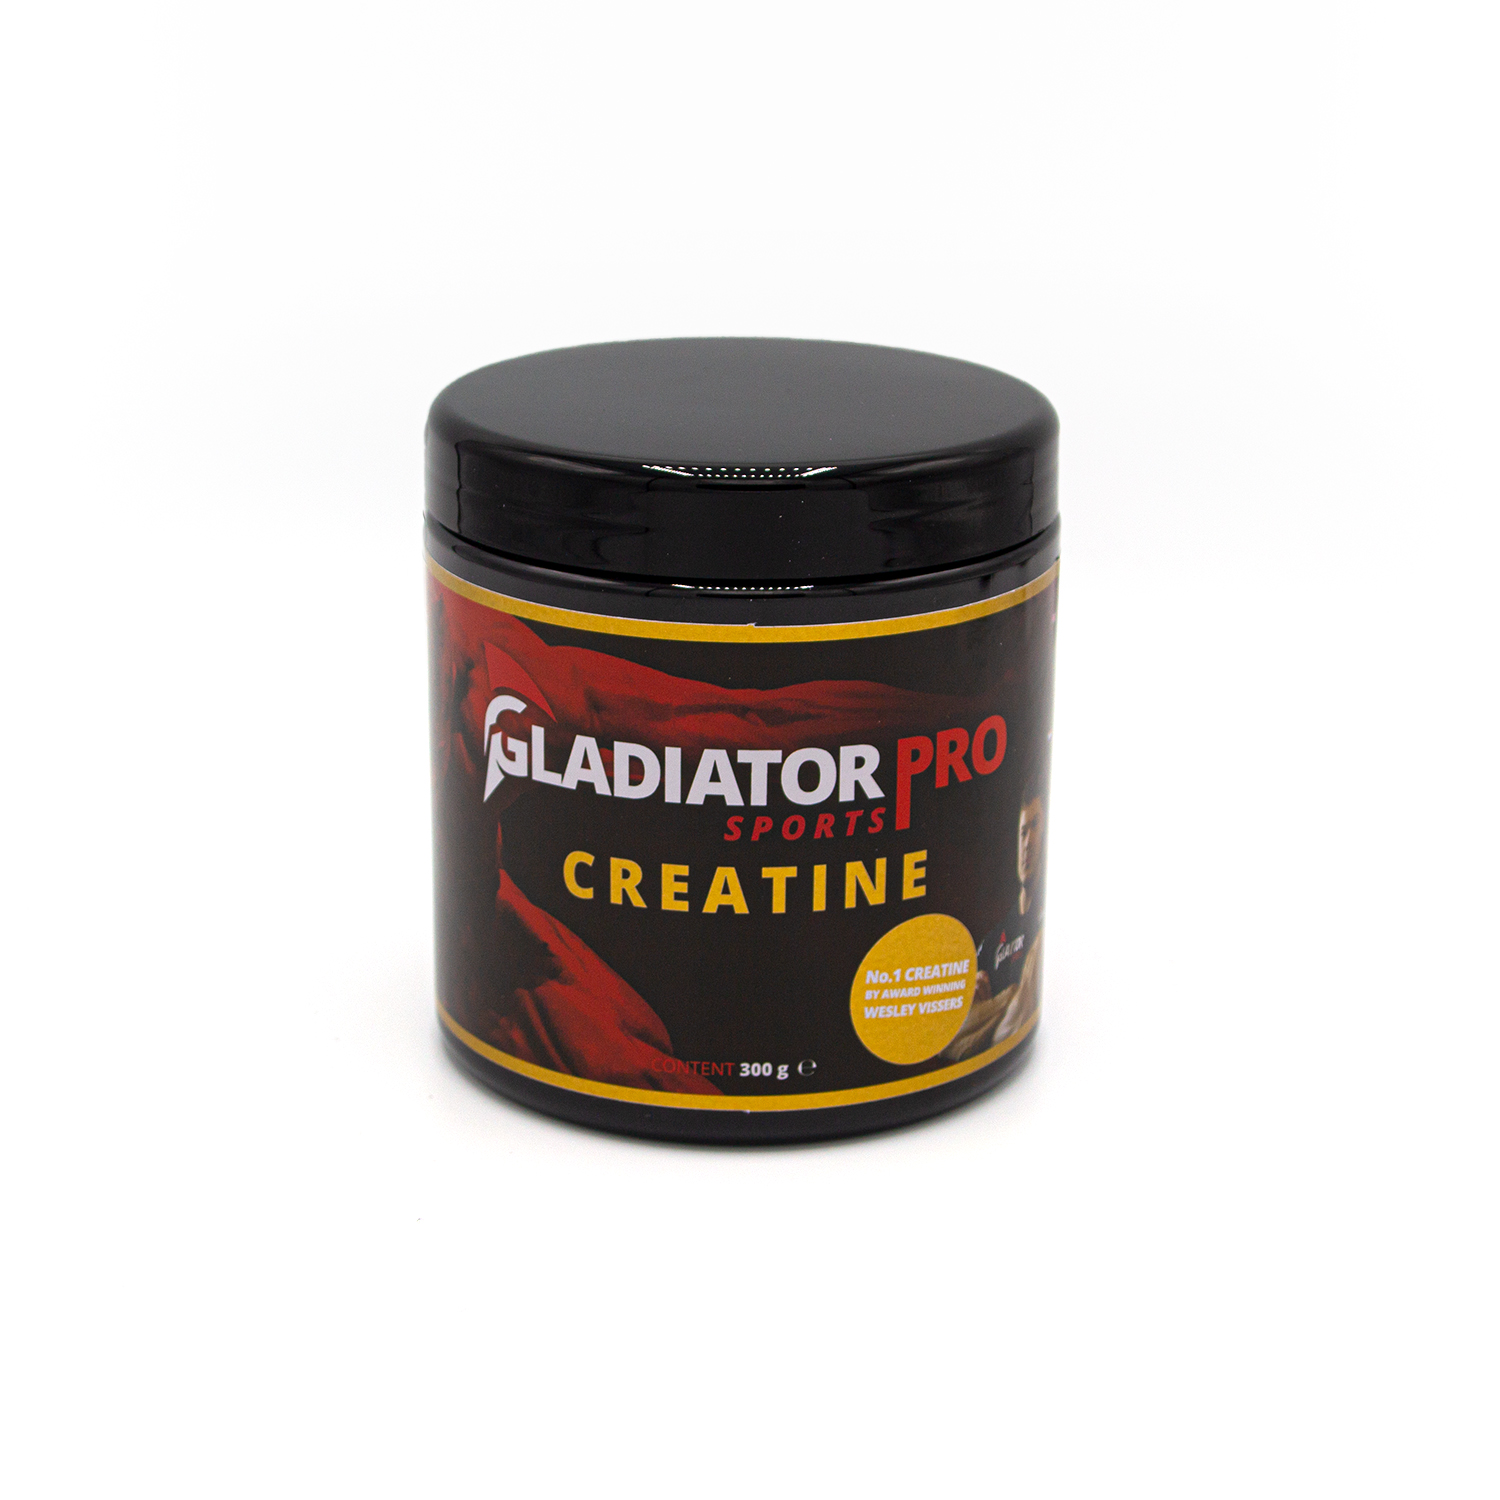 Gladiator Pro Pakket